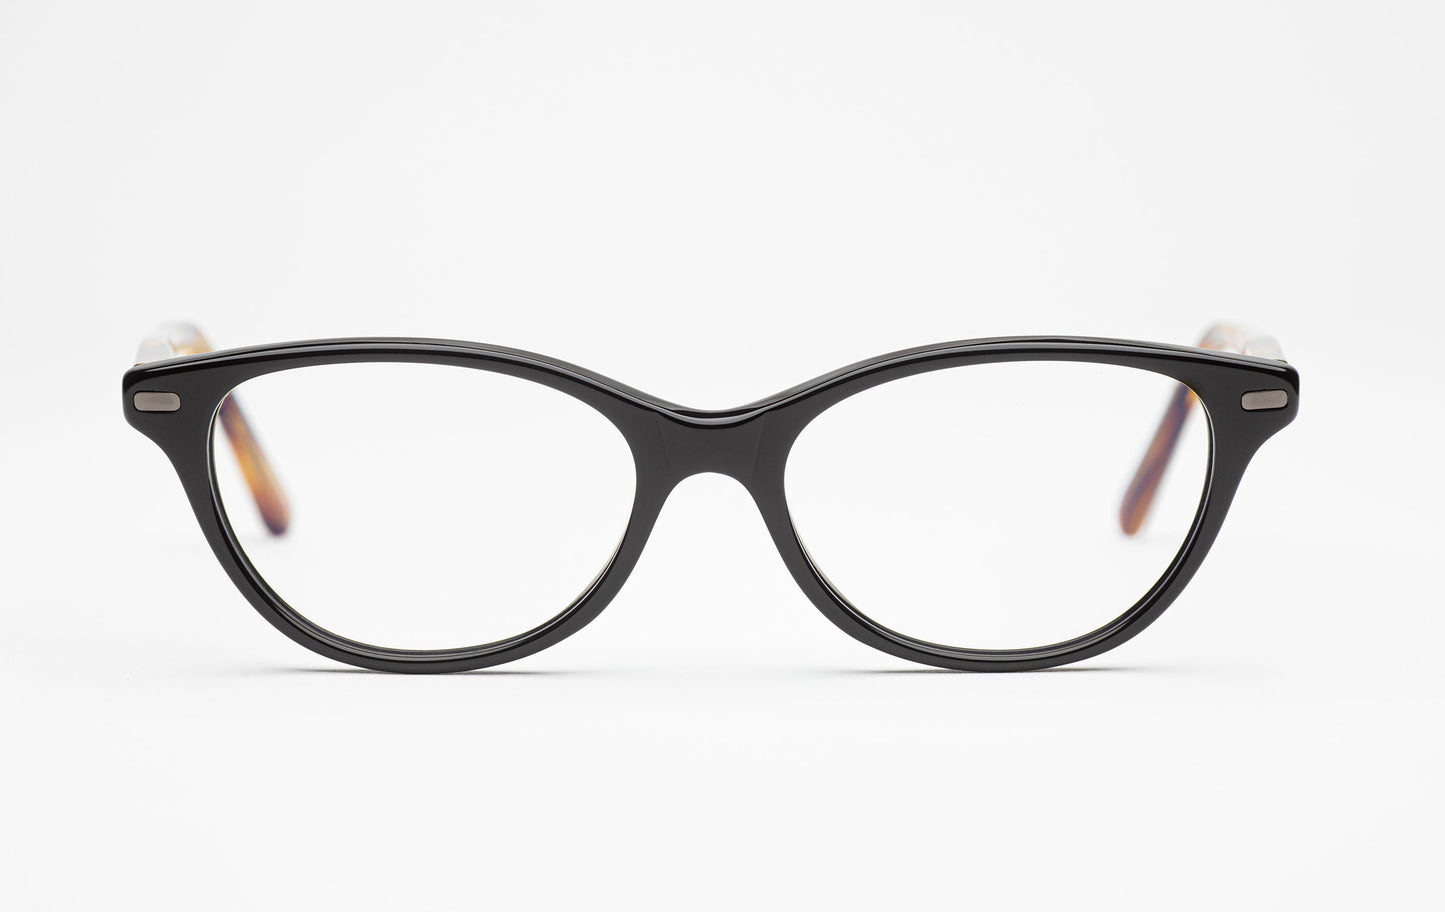 Black Oval Cat Eye Glasses with tortoiseshell stems